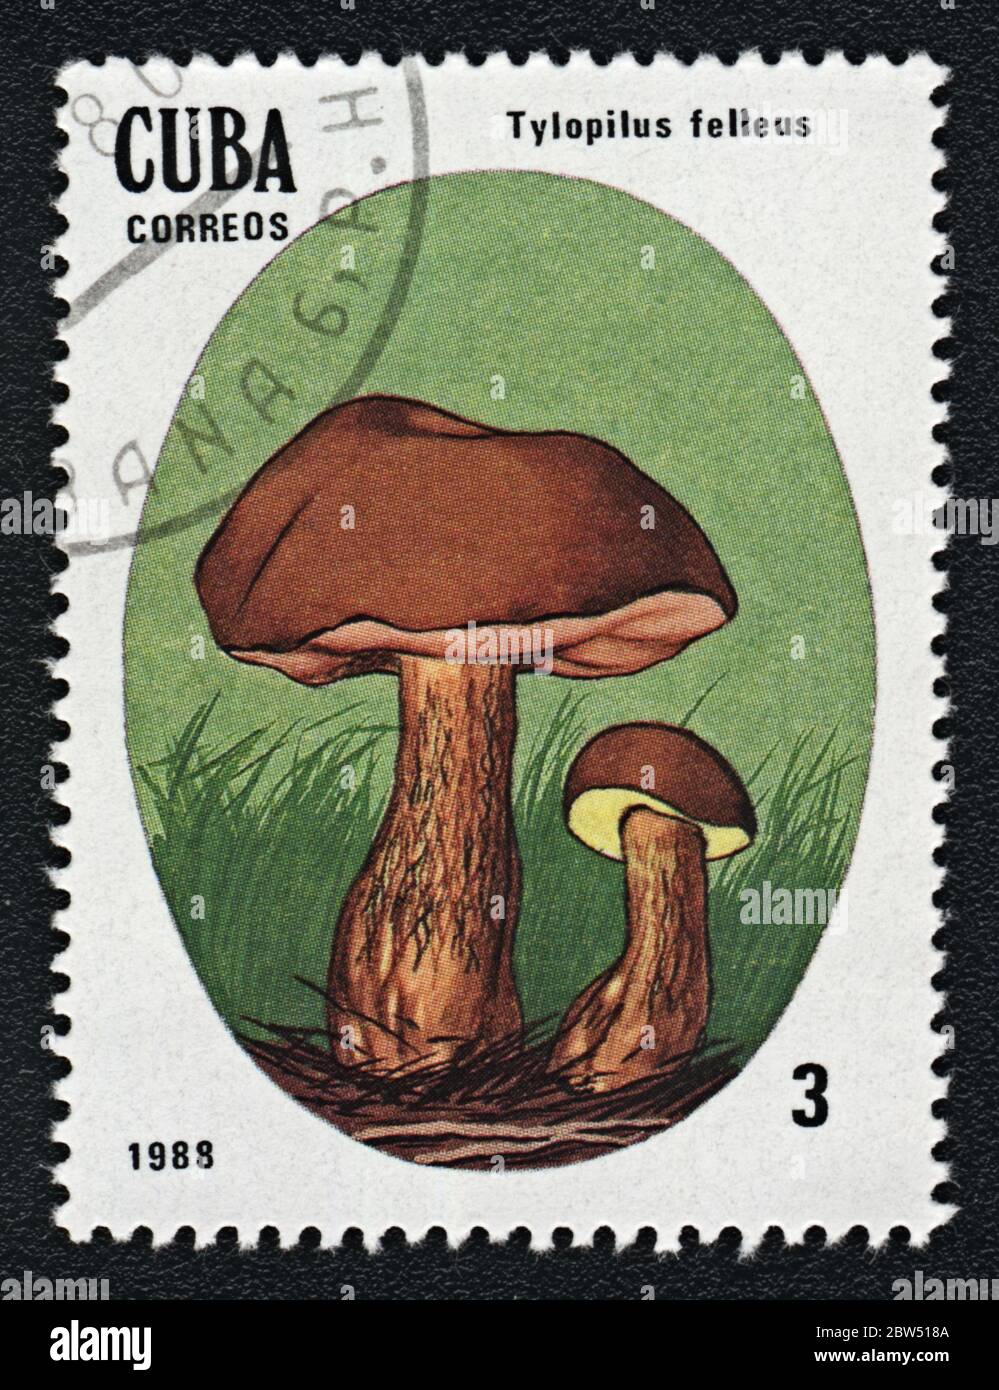 Tylopilus felleus inedible fungus. Series: Inedible and Poisonous Mushrooms. Postage stamp Cuba 1988 Stock Photo